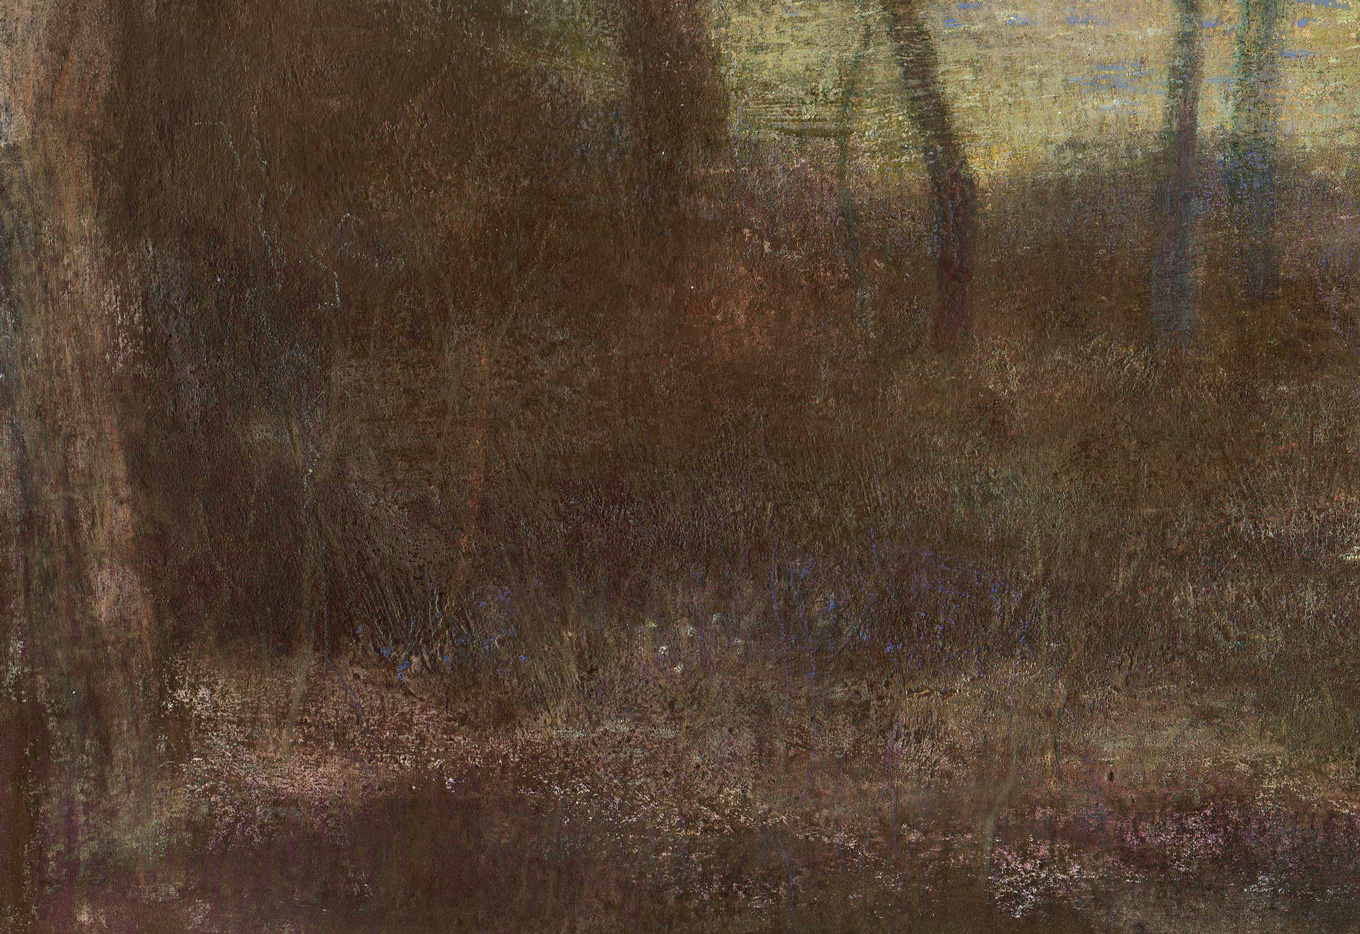 L1263 - Nicholas Herbert, British Artist, mixed media landscape painting of Mermaid Pond, Aspley Wood, 2021